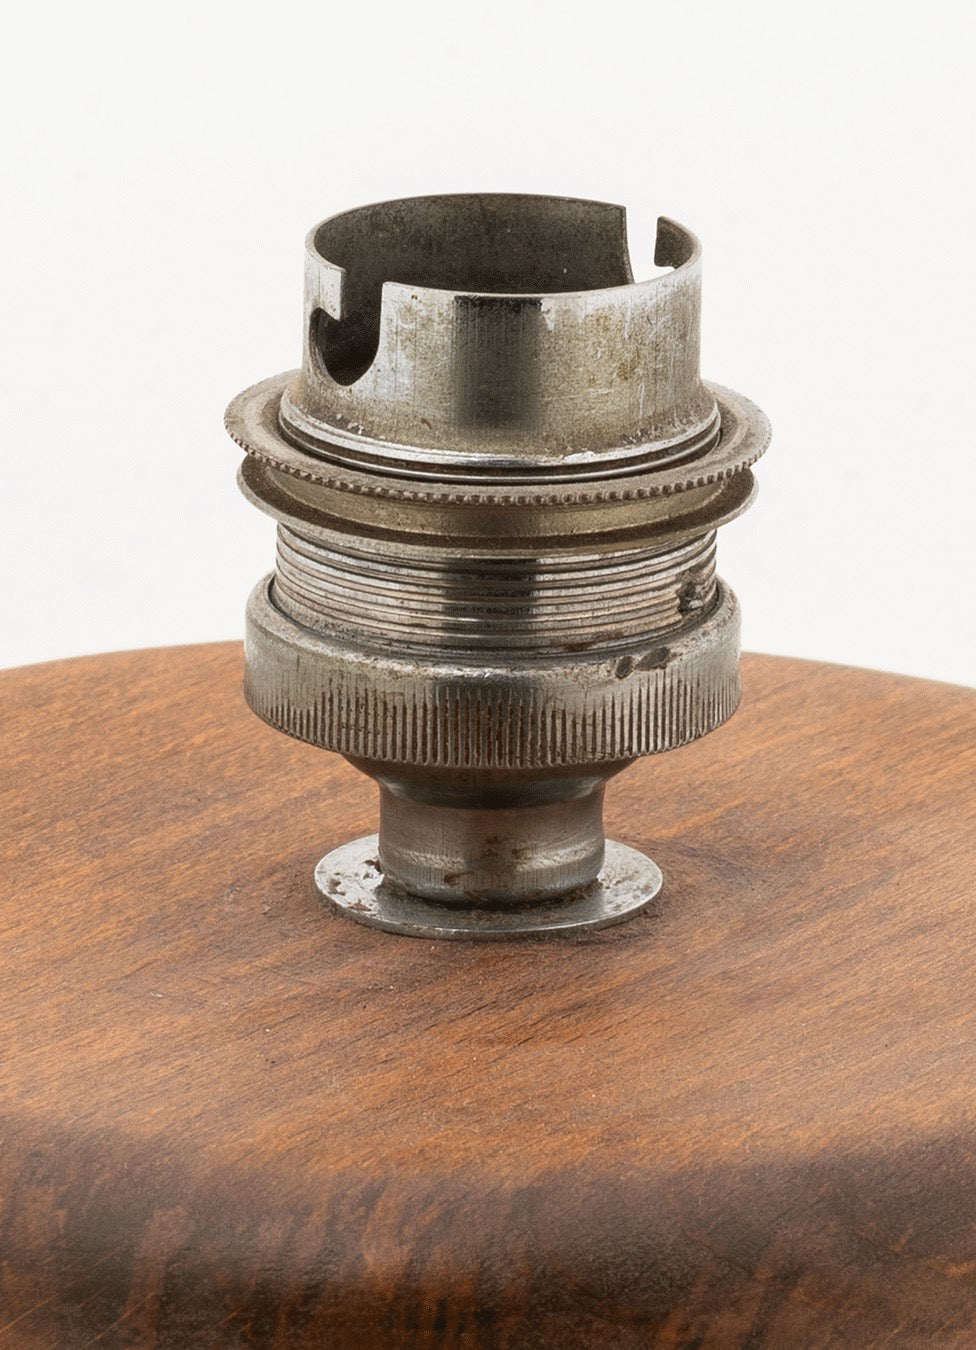 Vintage 1970s Lamp Base - Walnut Wood & Chrome-Plated Brass